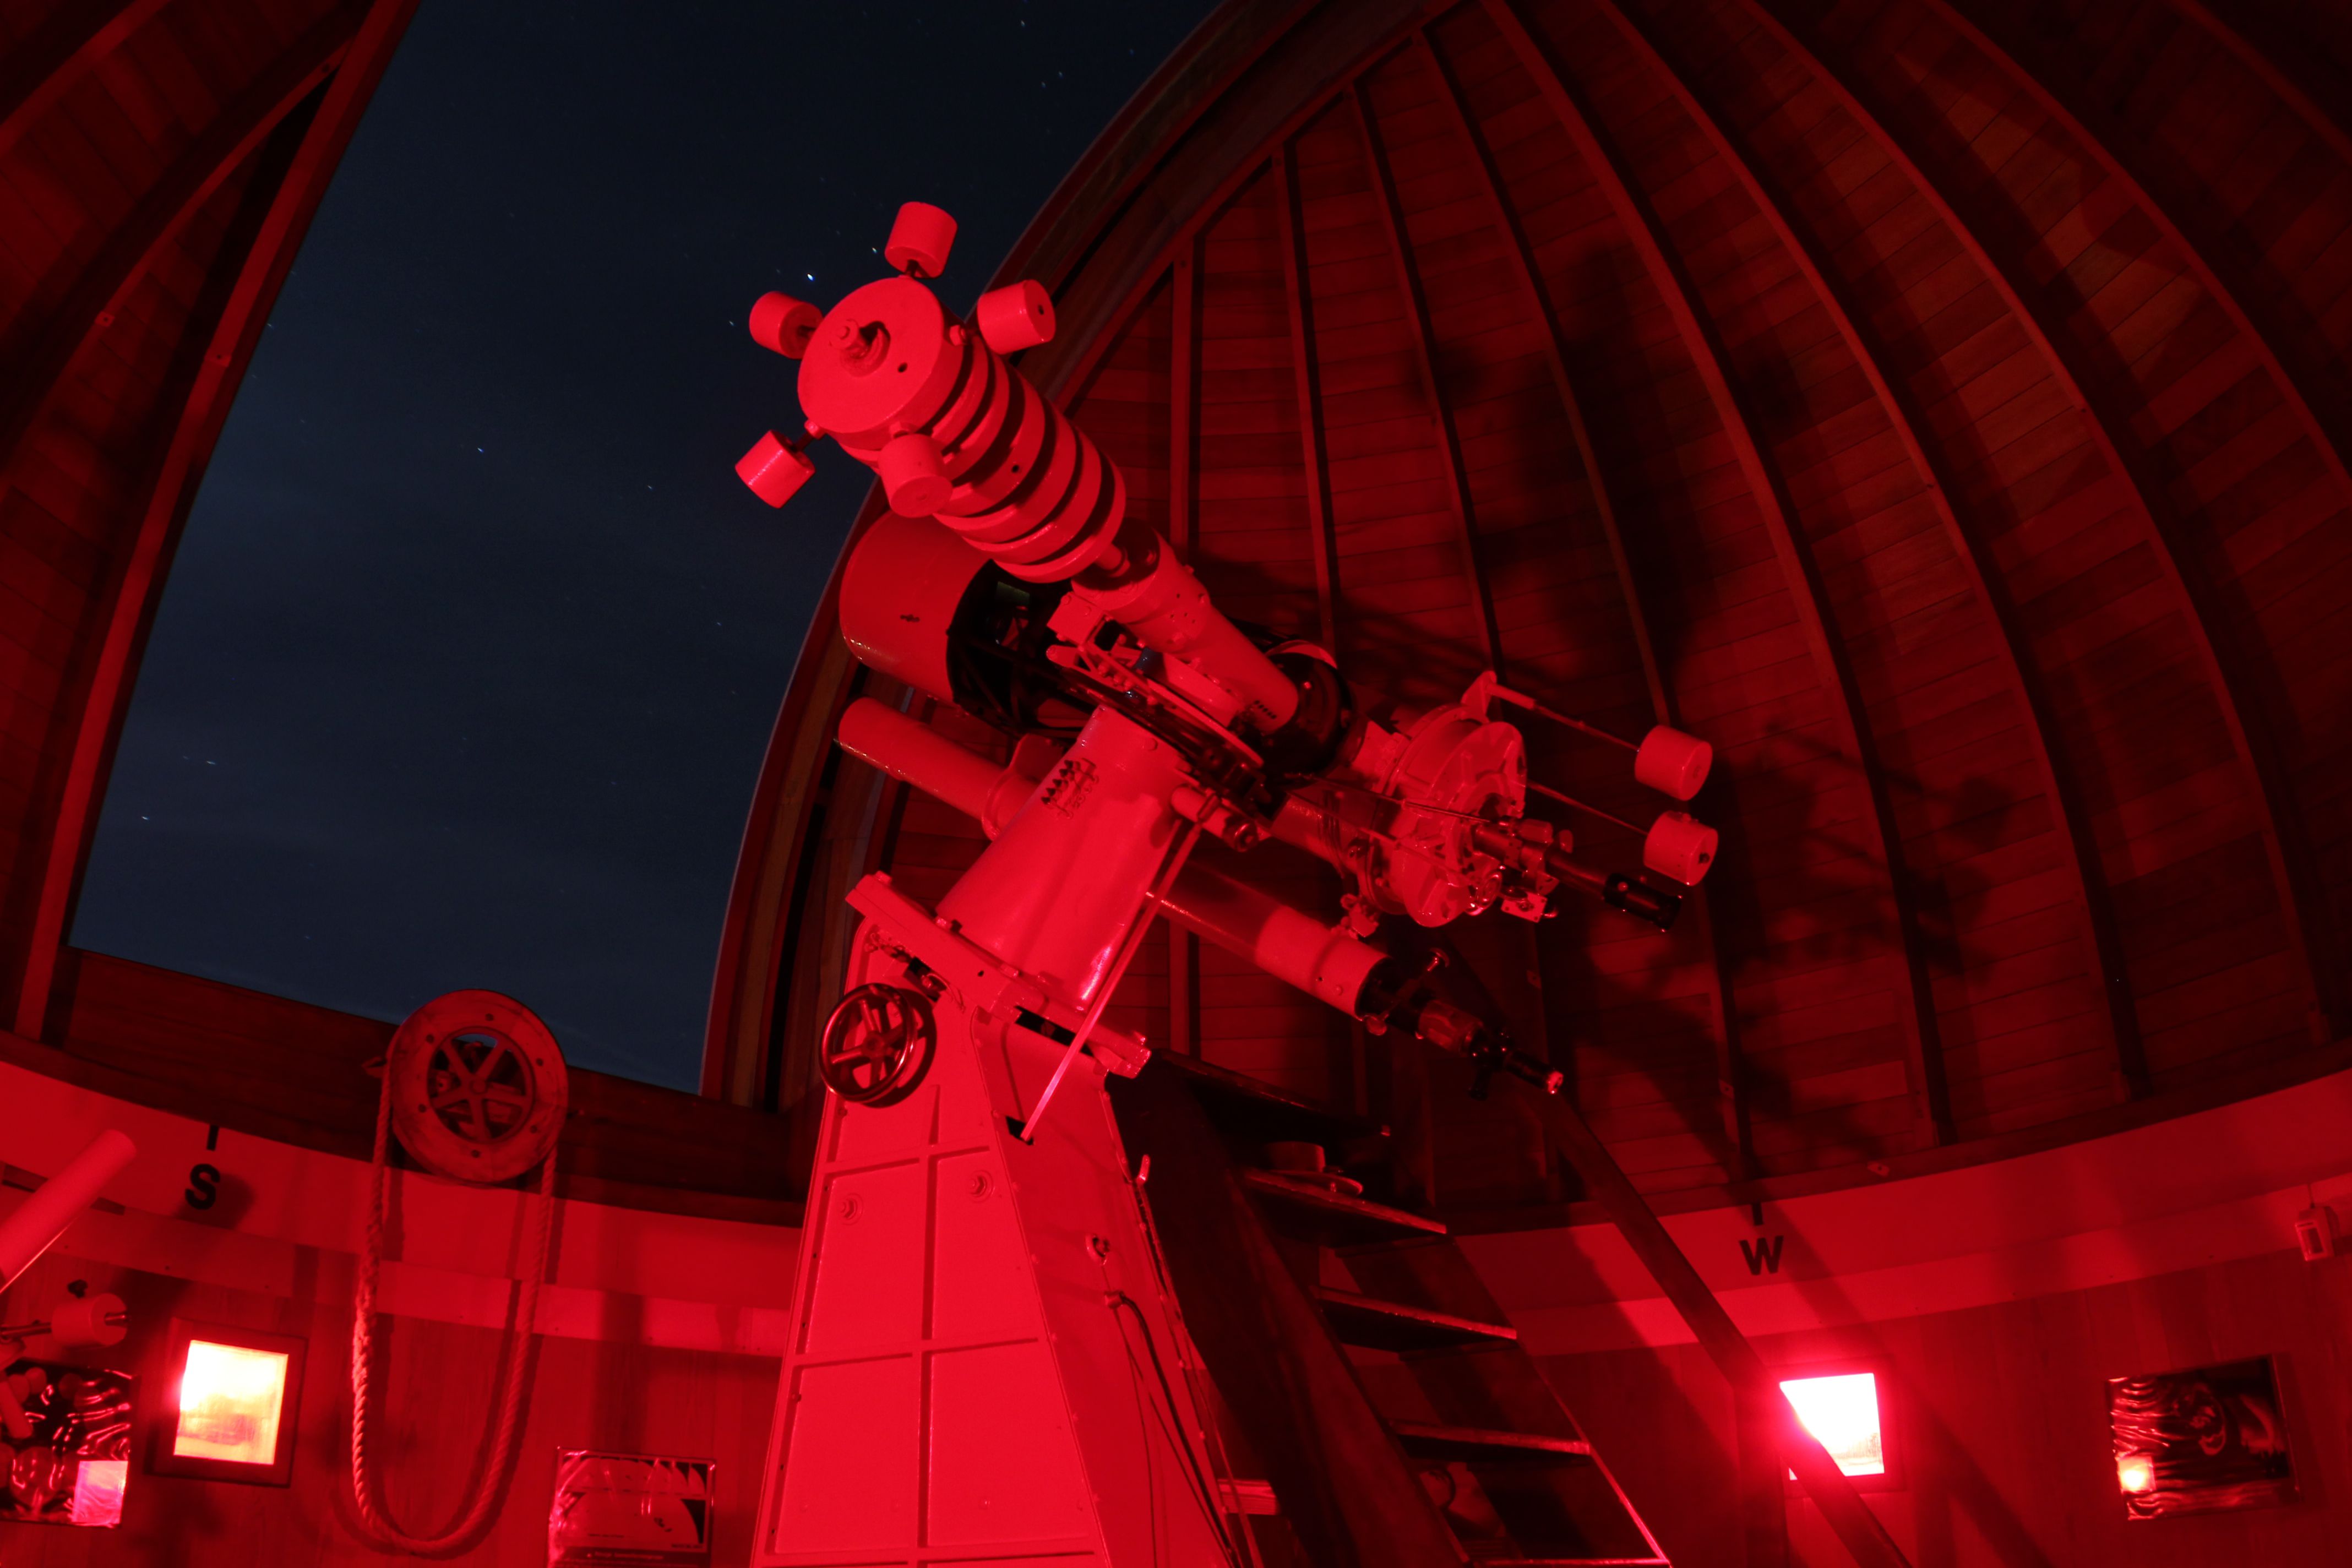 on 2011, November 4 - main telescope - old 12inch cassegrain